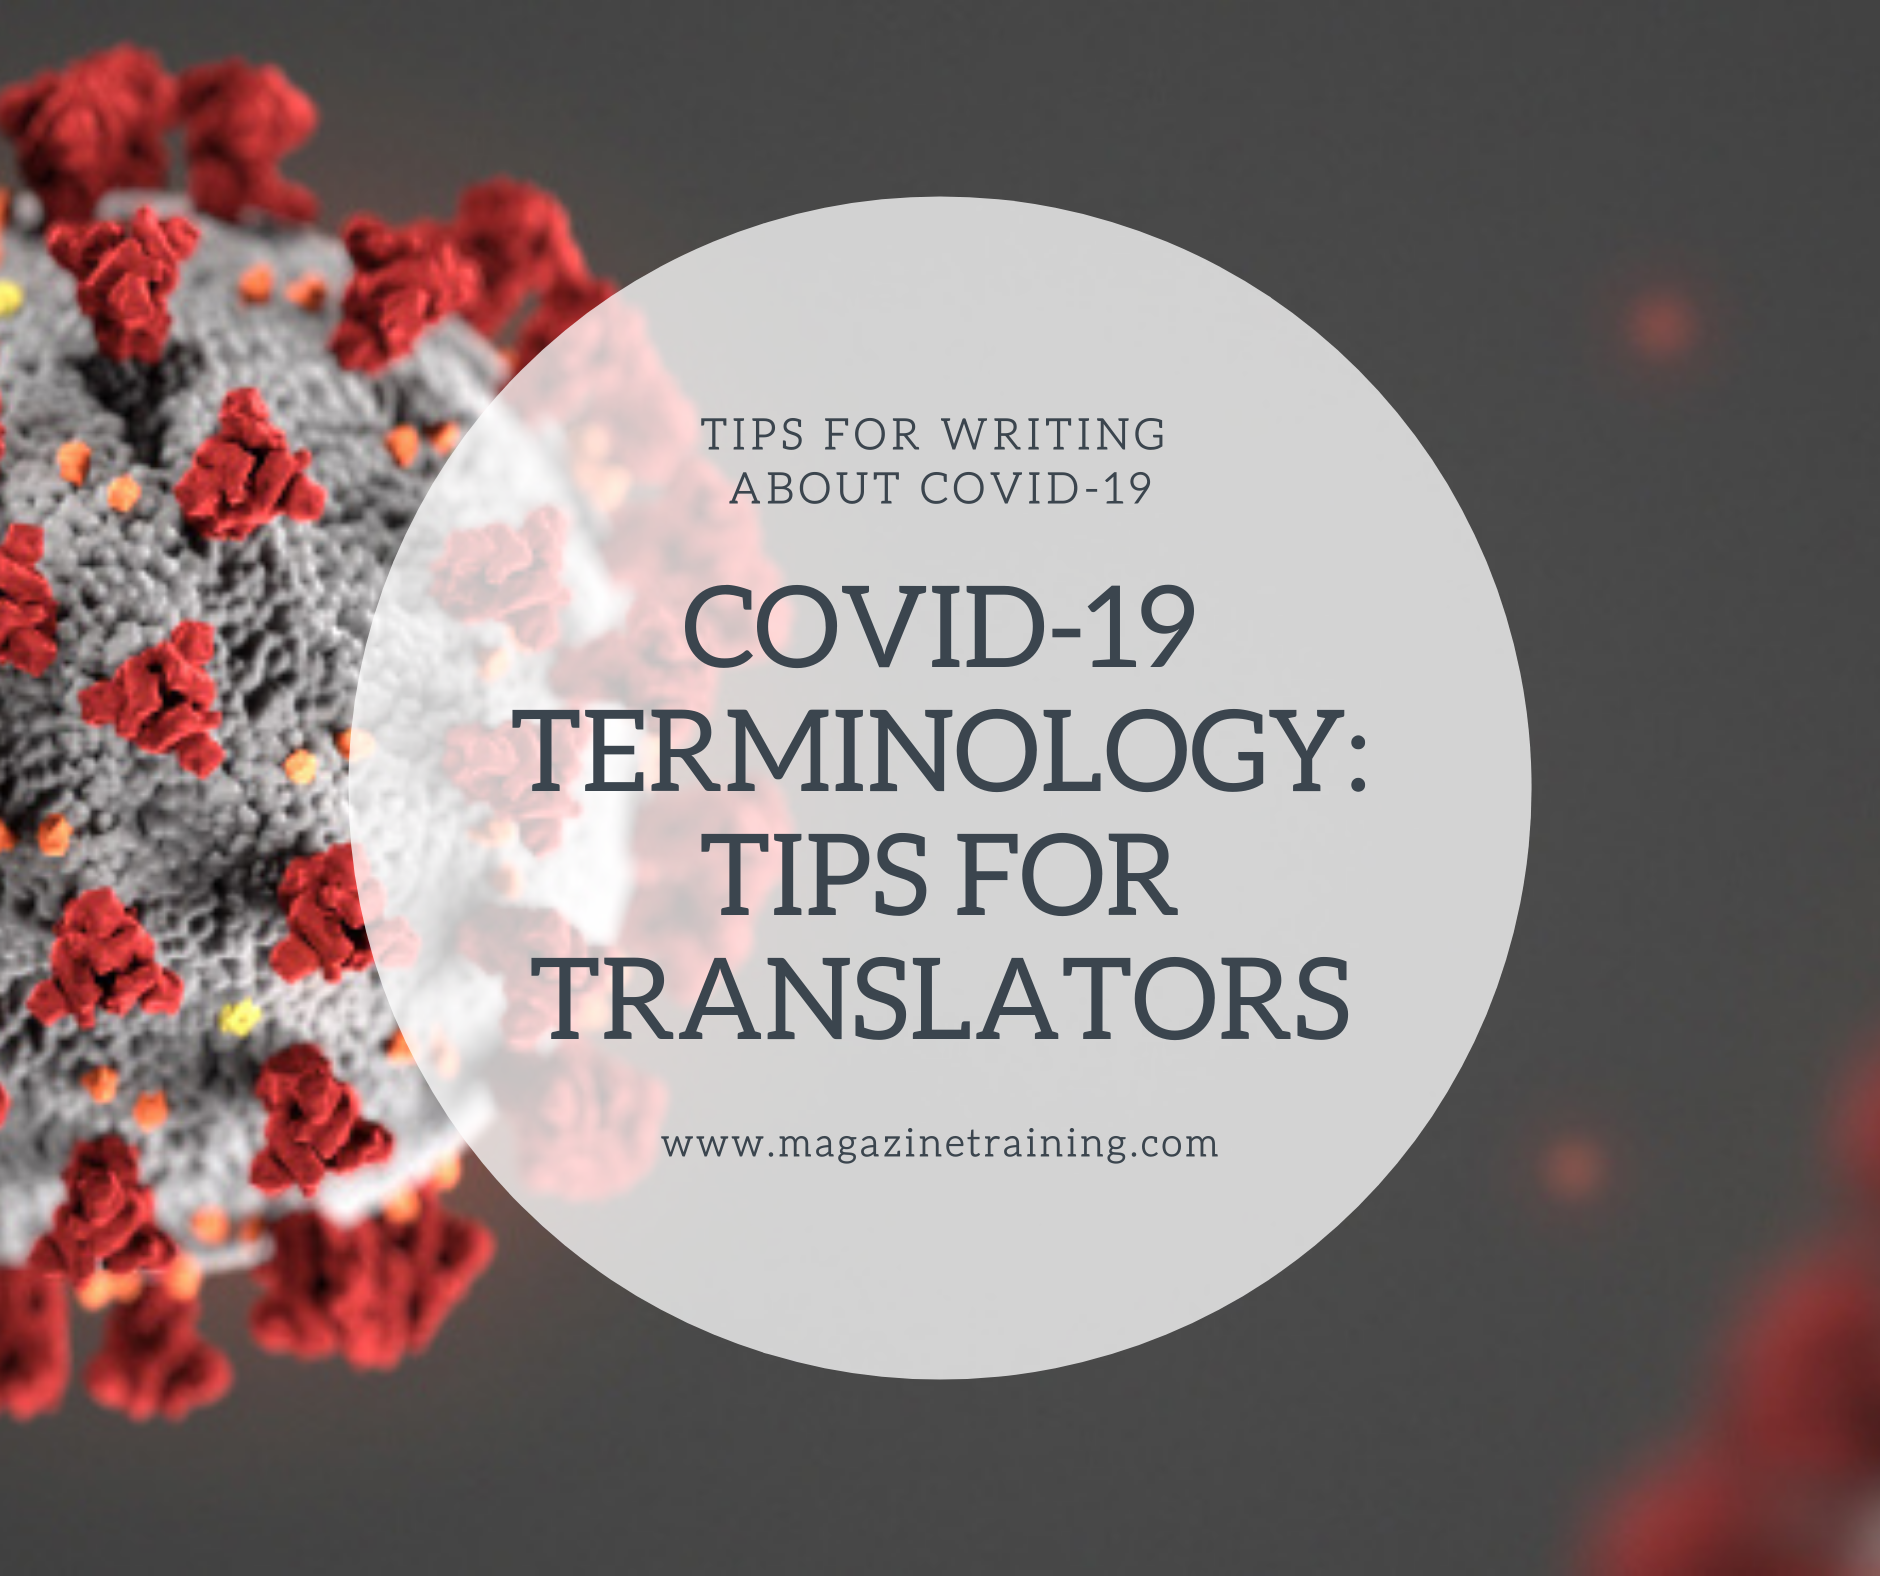 COVID terminology for translators